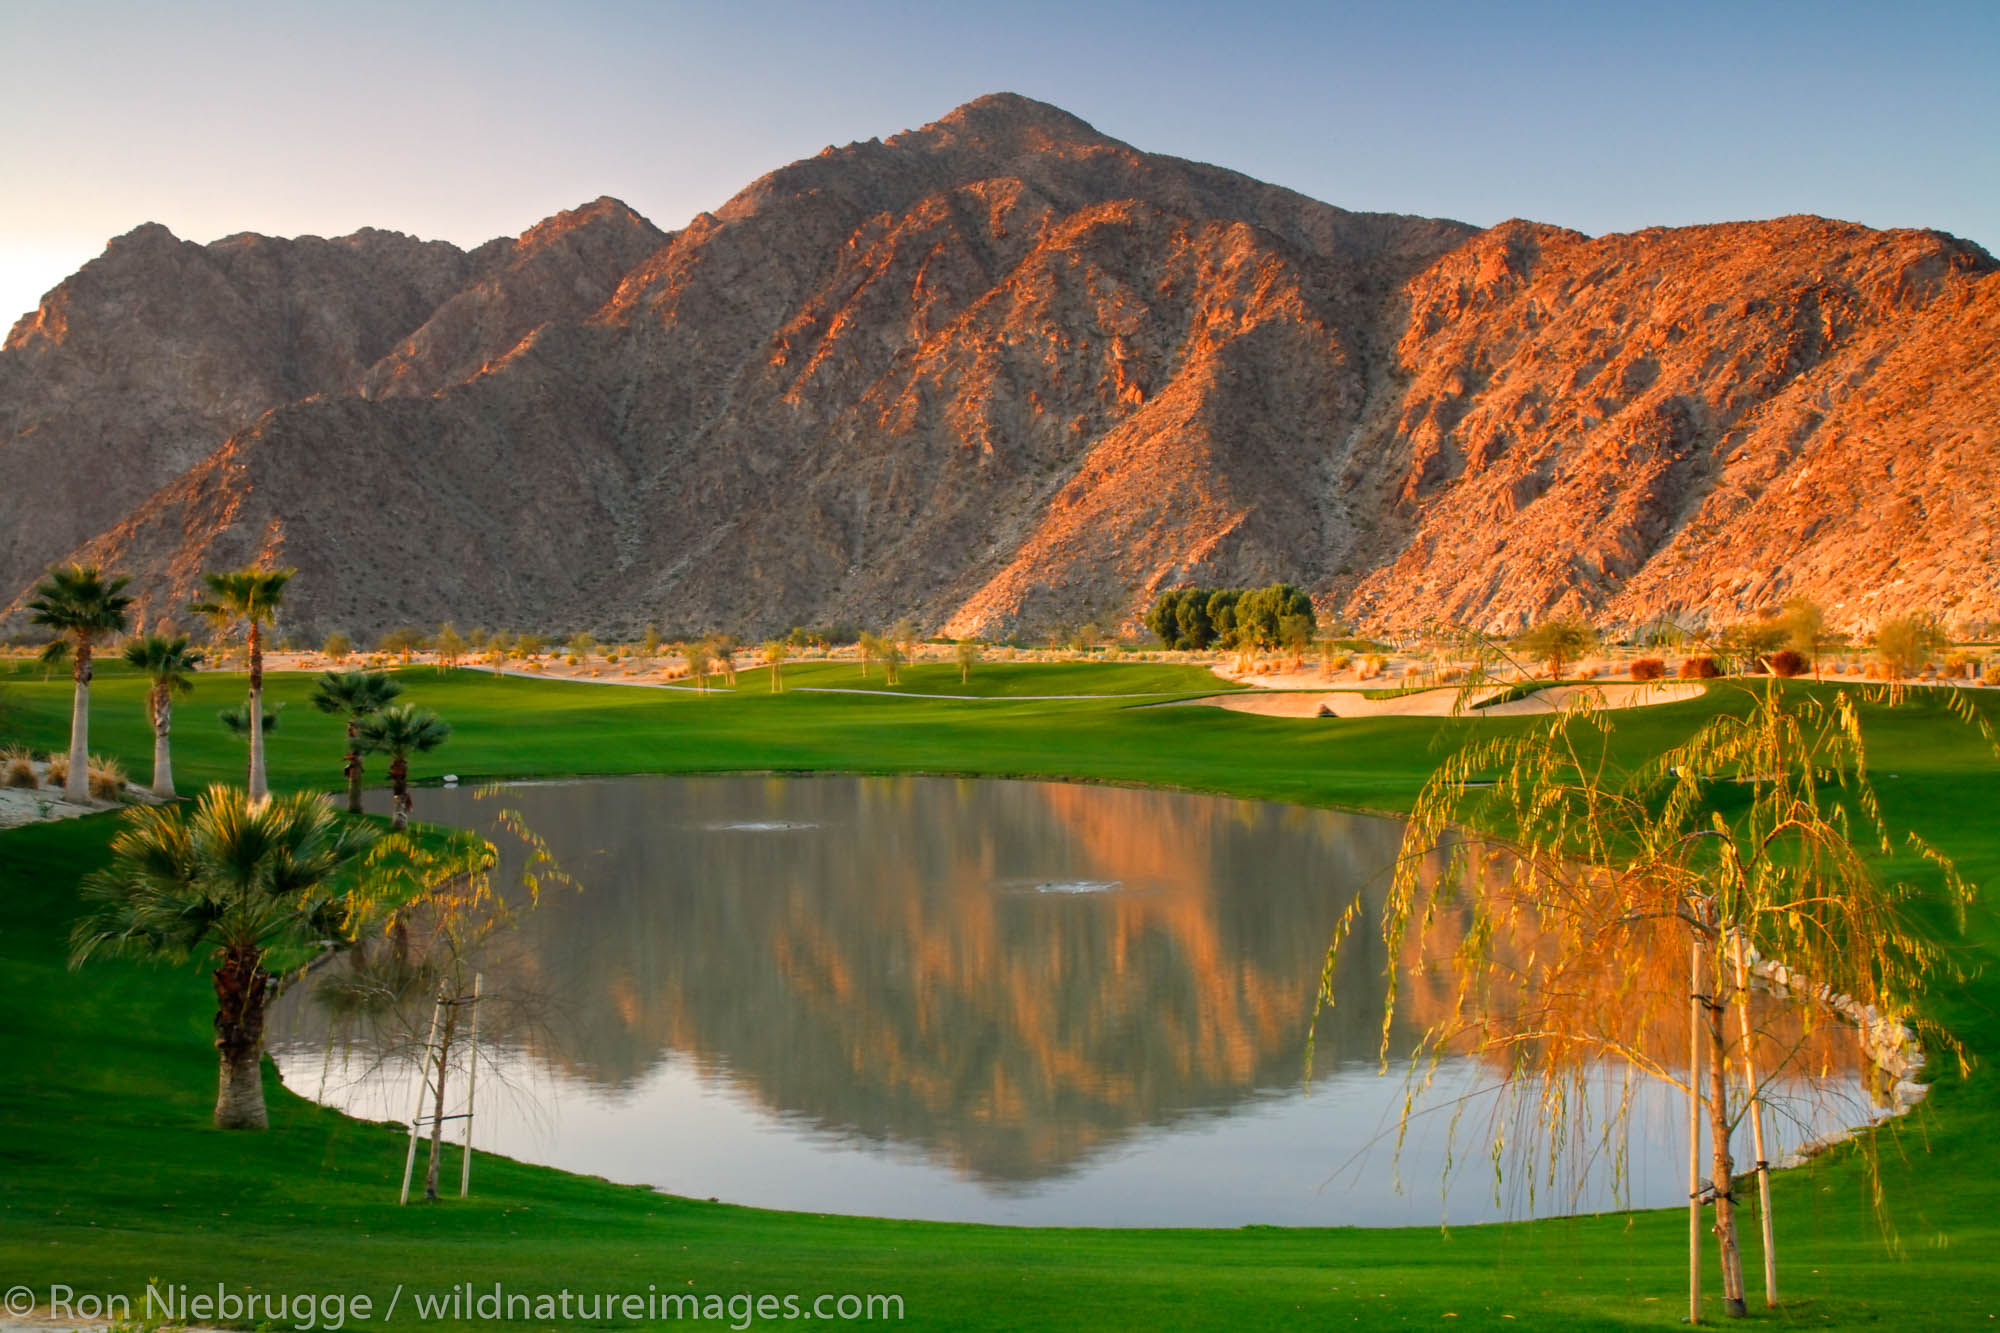 Silver Rock Resort and golf course in La Quinta near Palm Springs, California.